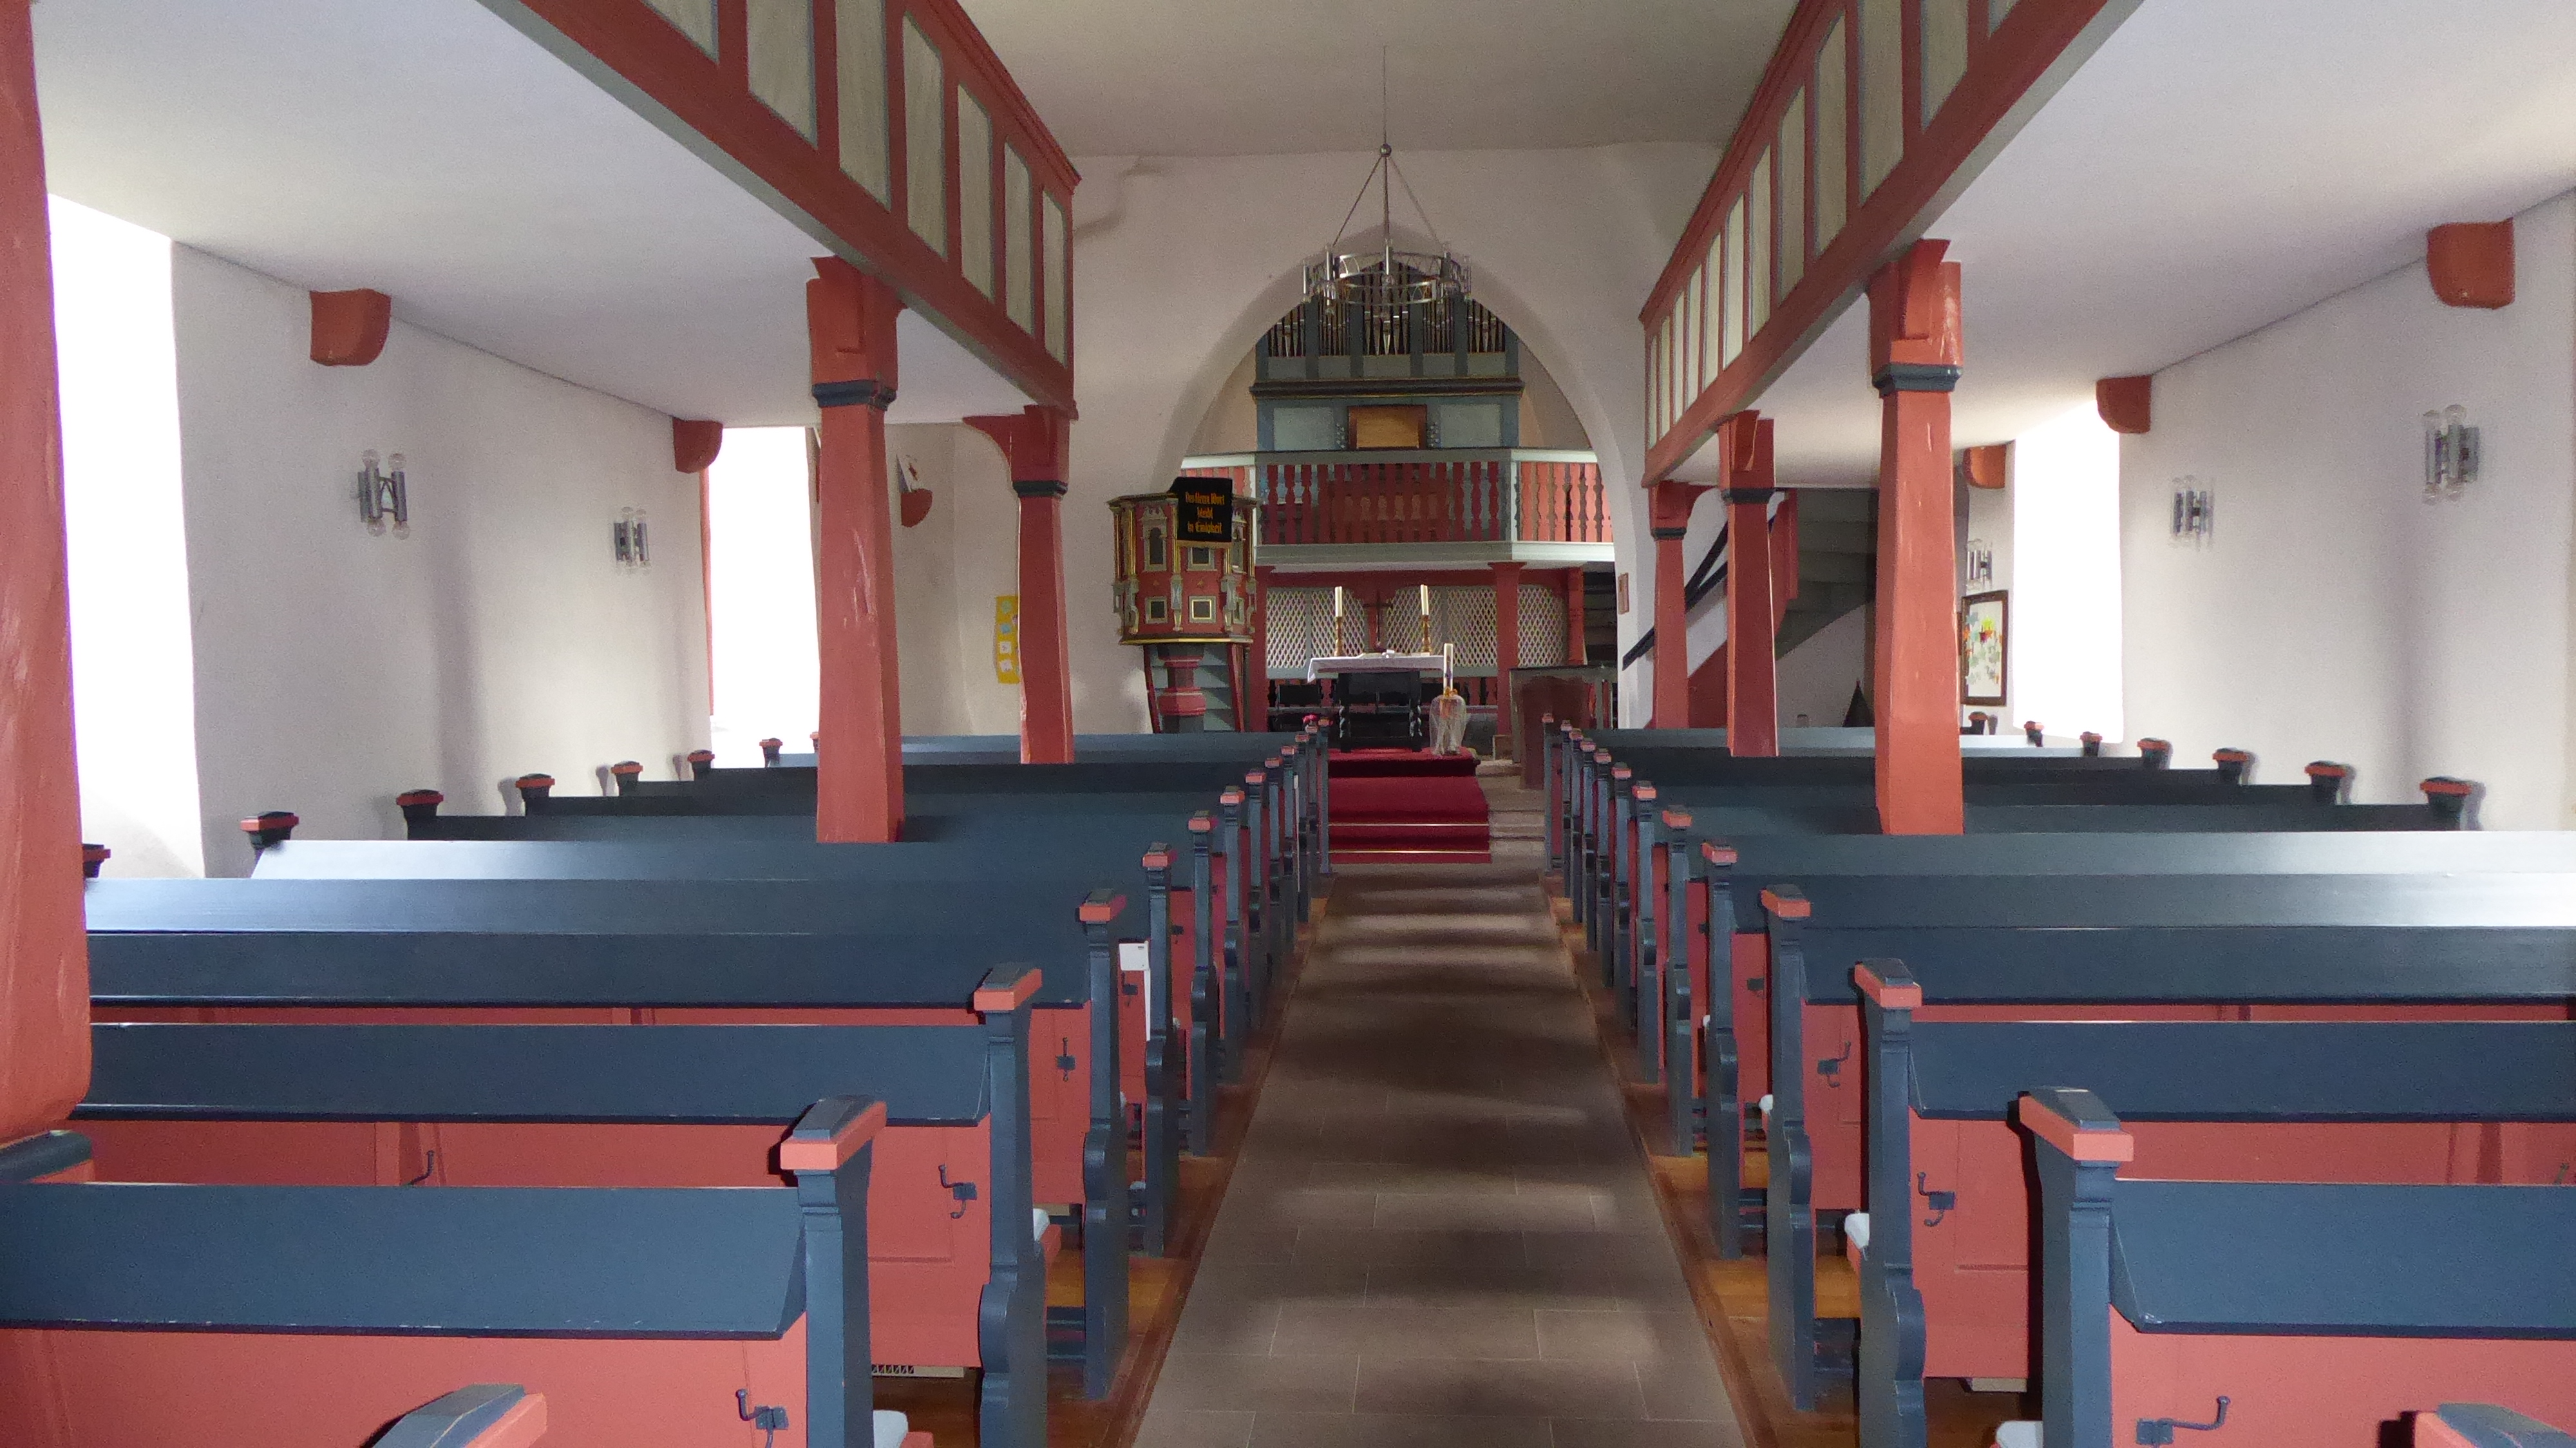 Interior of Kirchbracht Church 2016. Courtesy of Roger Burbank.